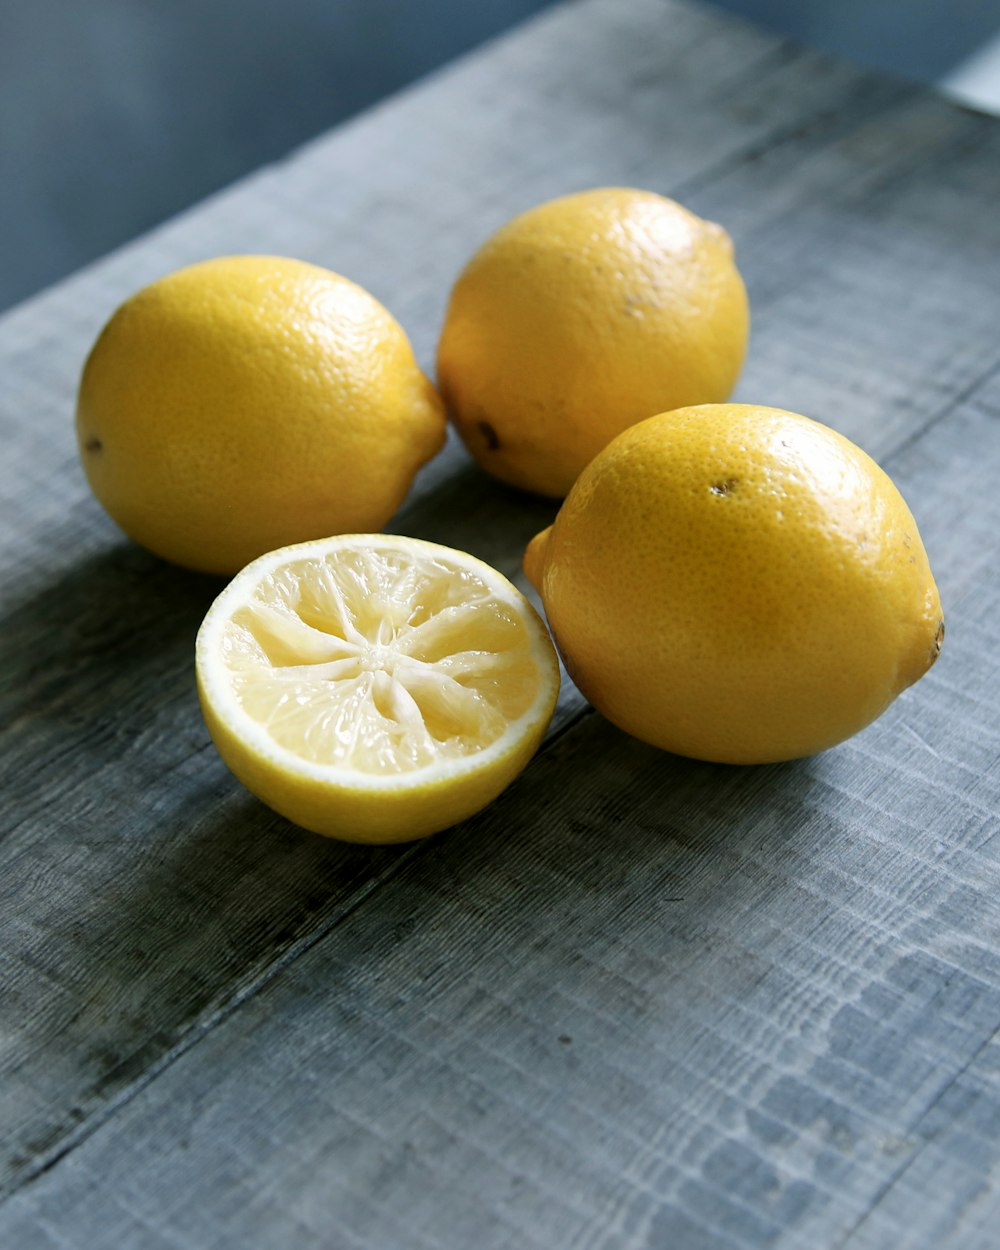 three yellow lemons beside sliced lemon placed on gray wooden surface